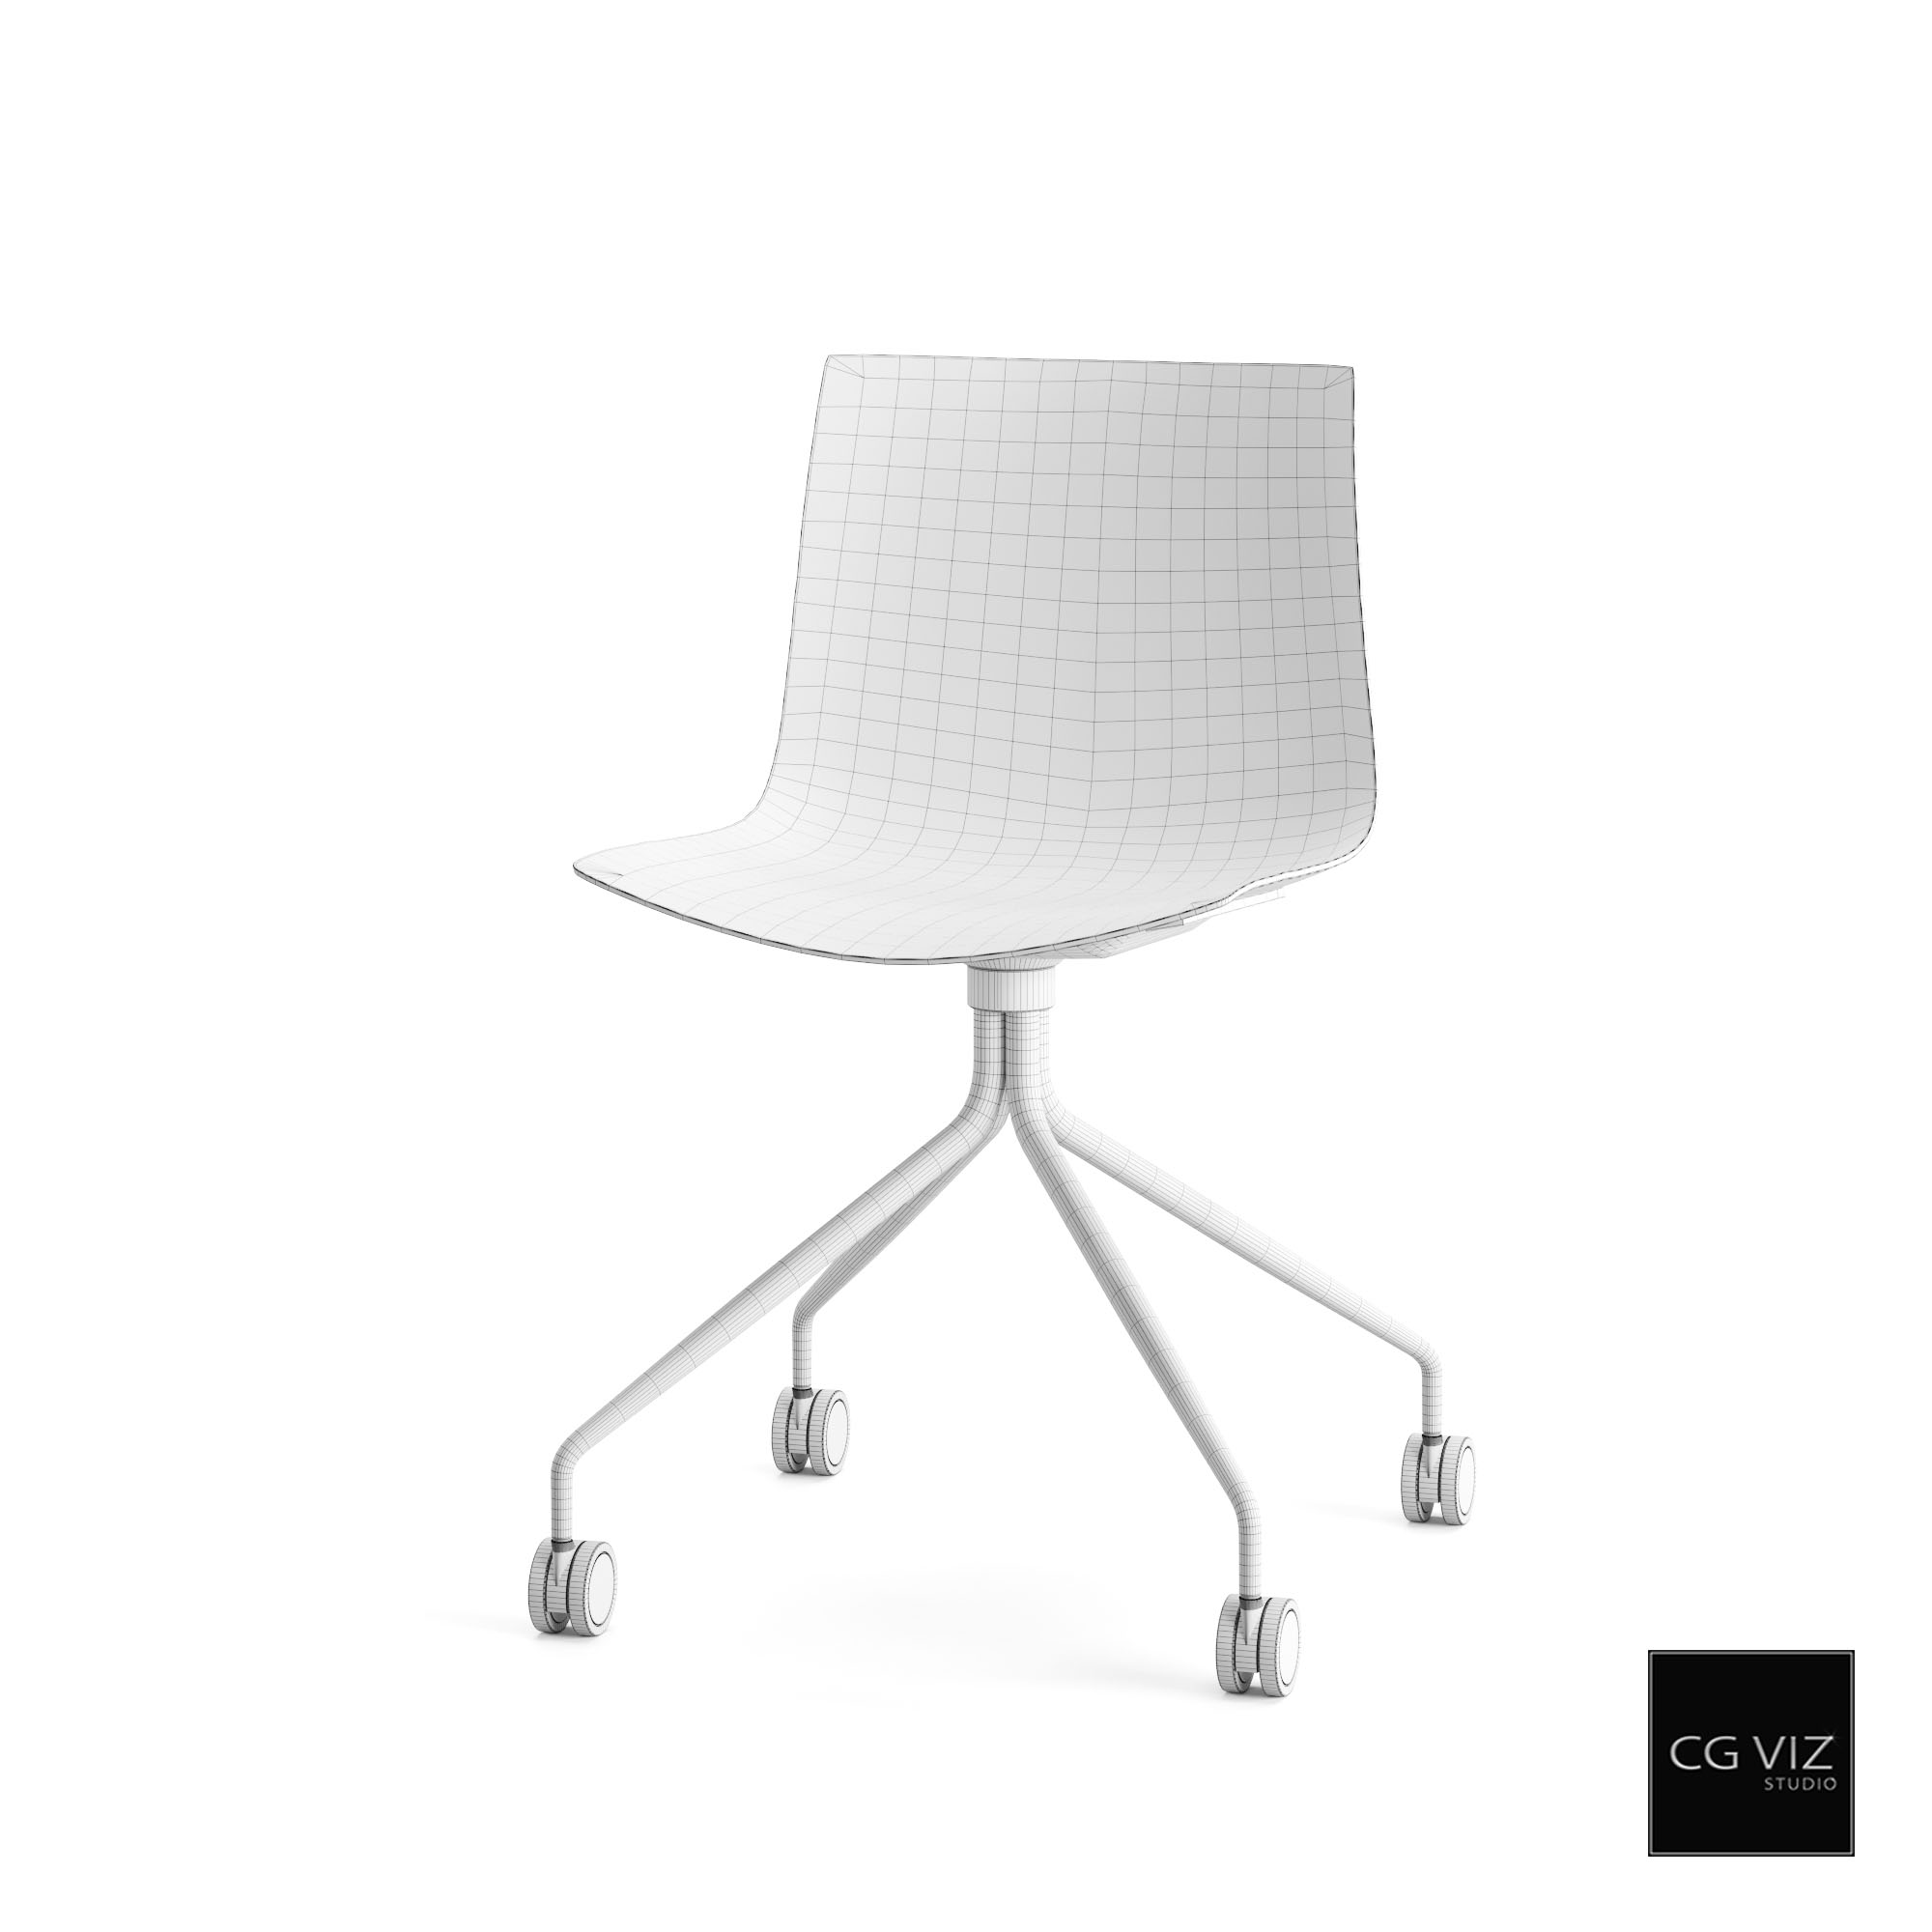 Wireframe View of Arper Catifa 46 Chair 3D Model by CG Viz Studio